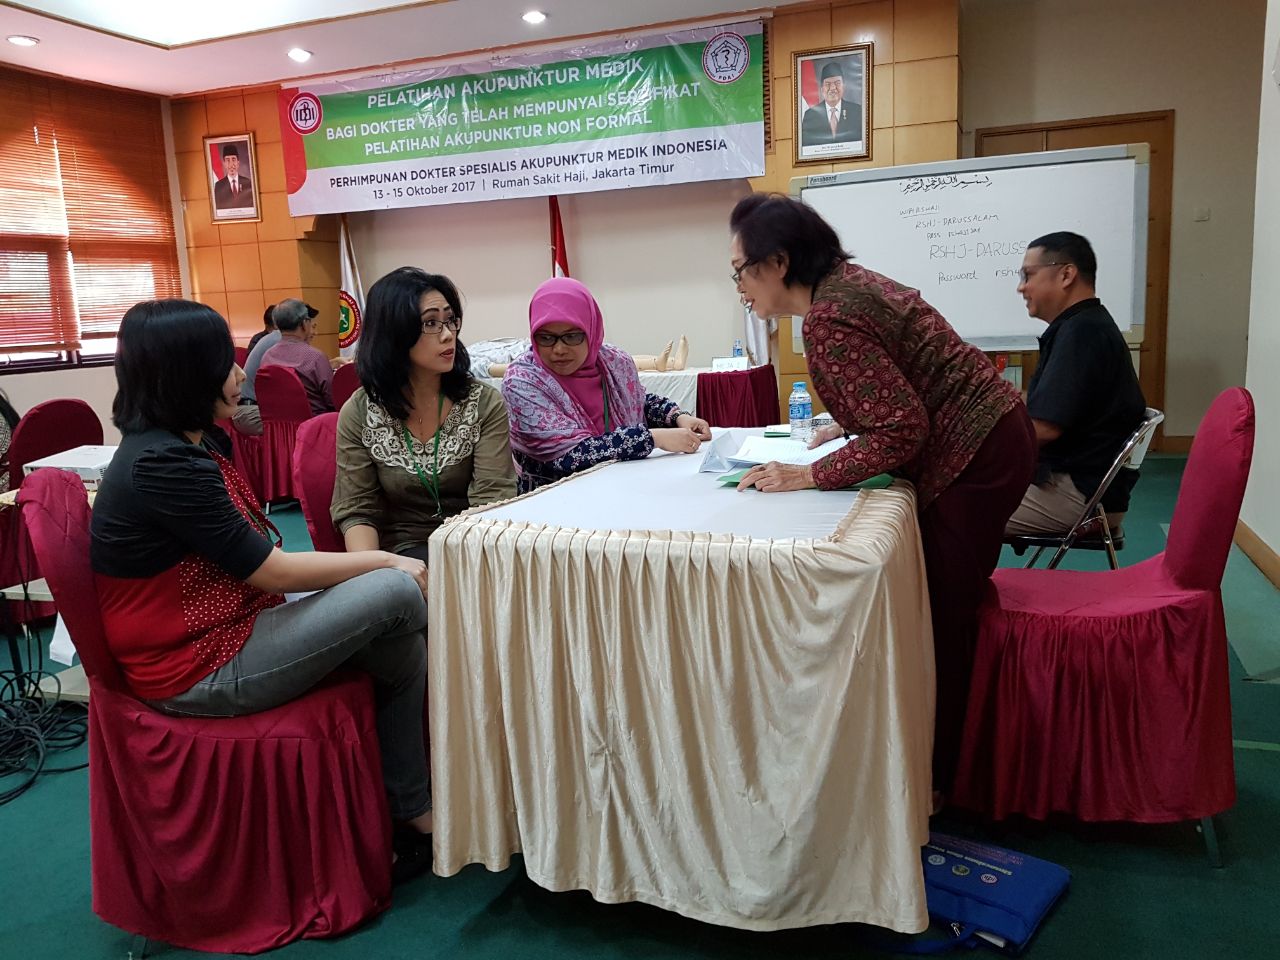 Pelatihan Akupunktur Medik bagi Dokter yang Telah Mempunyai Sertifikat Akupunktur Non Formal - 13101 - Perhimpunan Dokter Spesialis Akupunktur Medik Indonesia